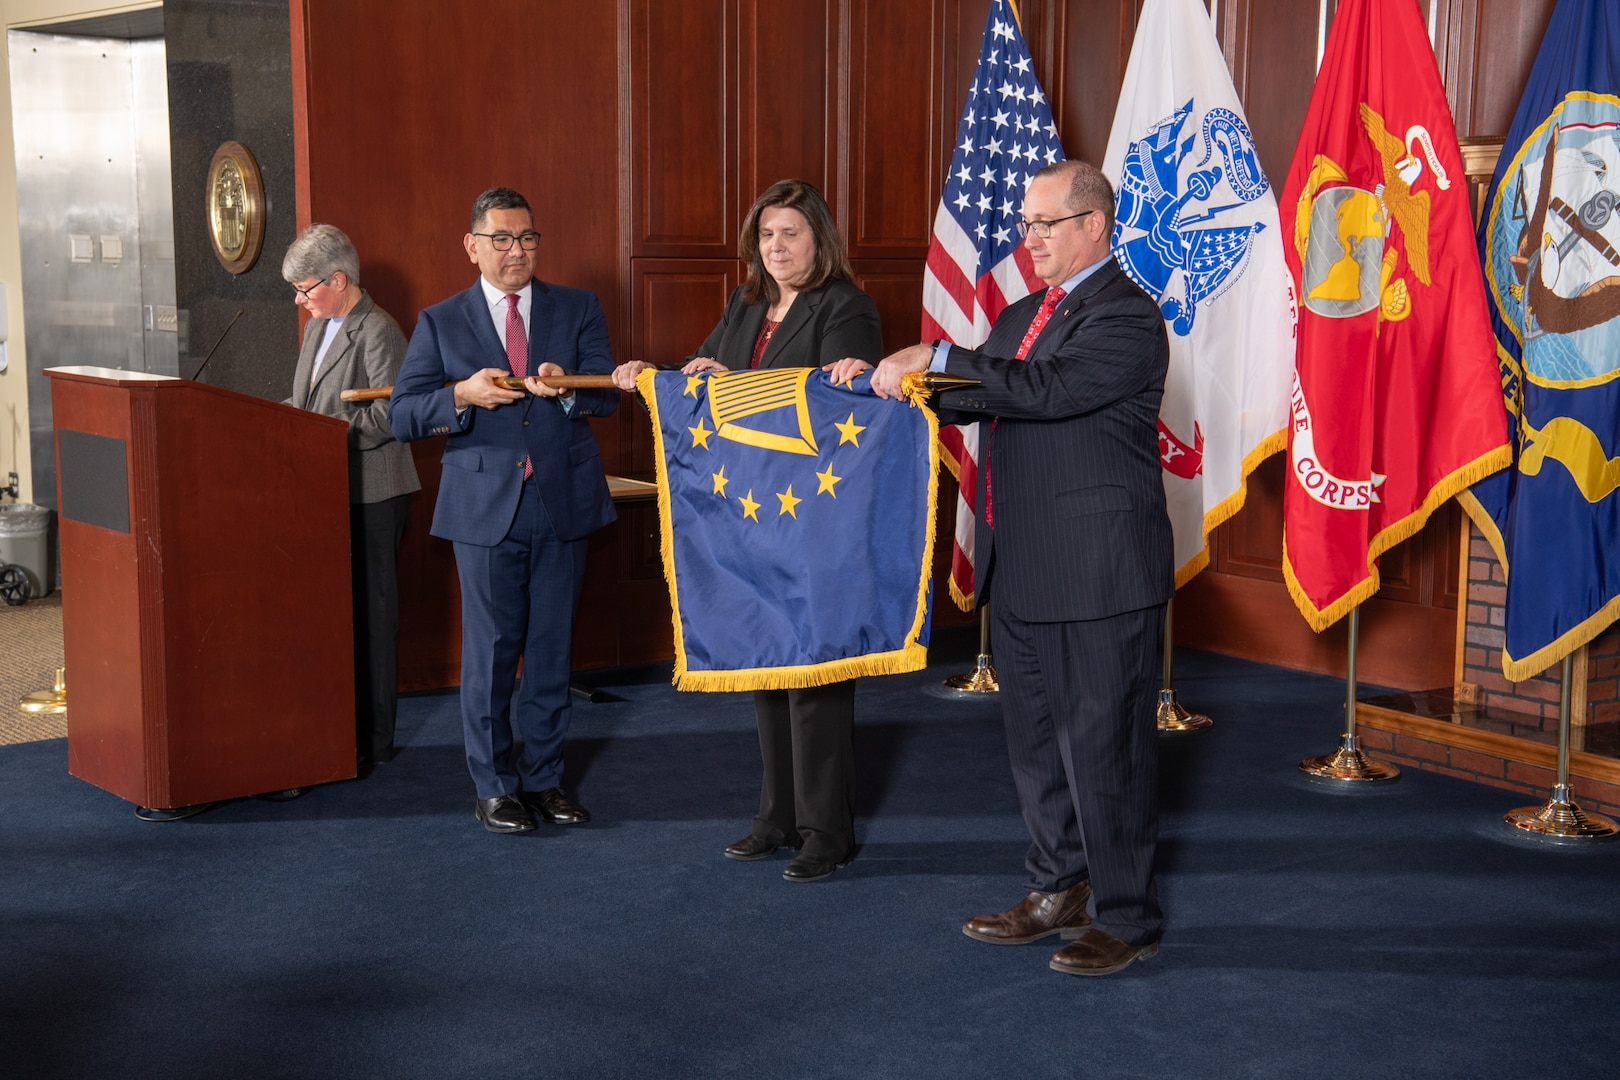 three individuals unfurl a senior executive service flag